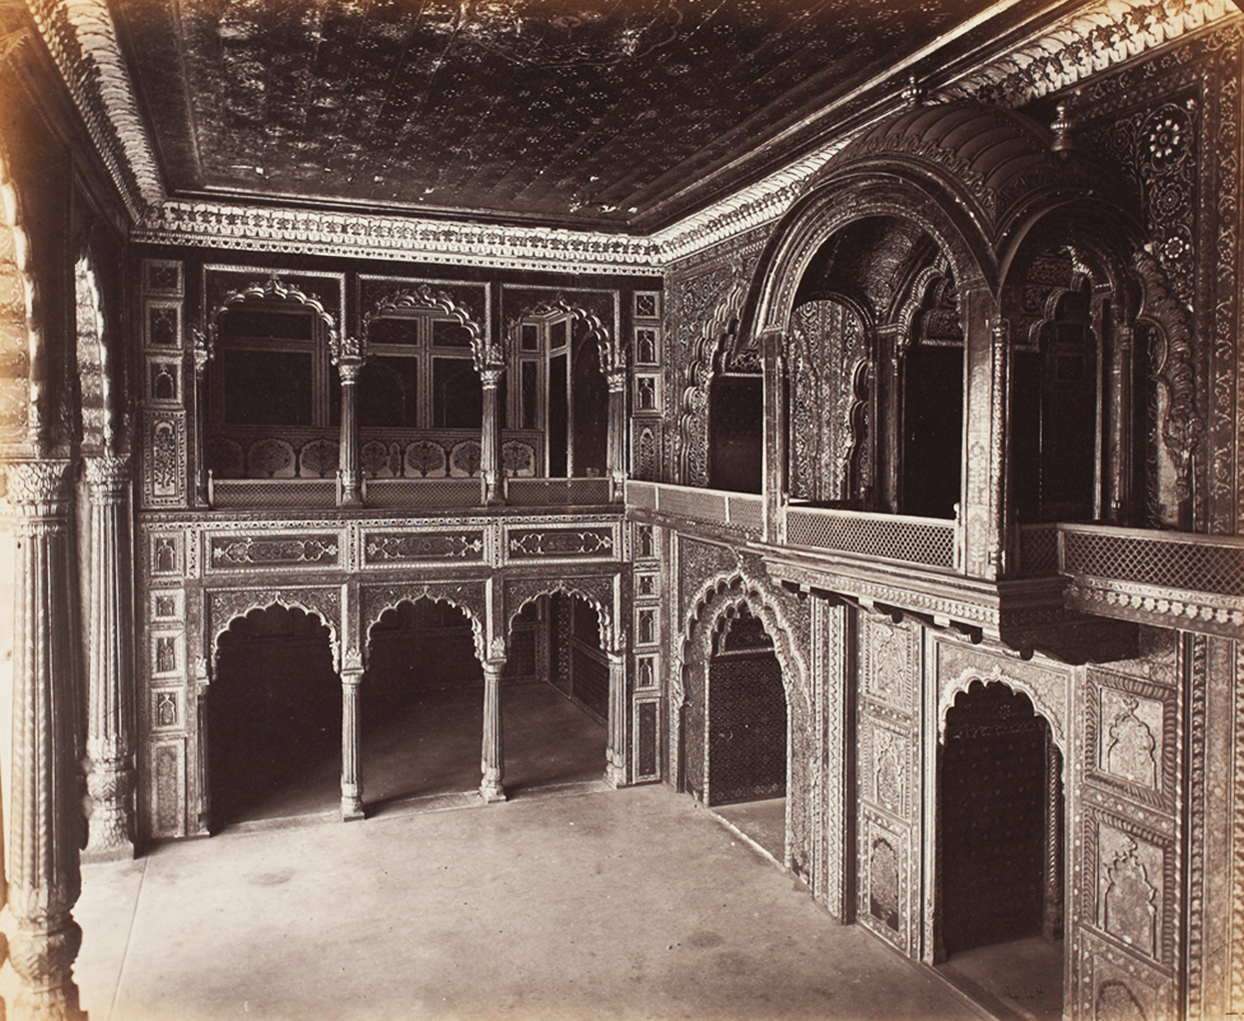 Black and White photograph of an intricate arcade and pavilion of the teakwod palace Darya Daulat Bagh, Srirangapatna